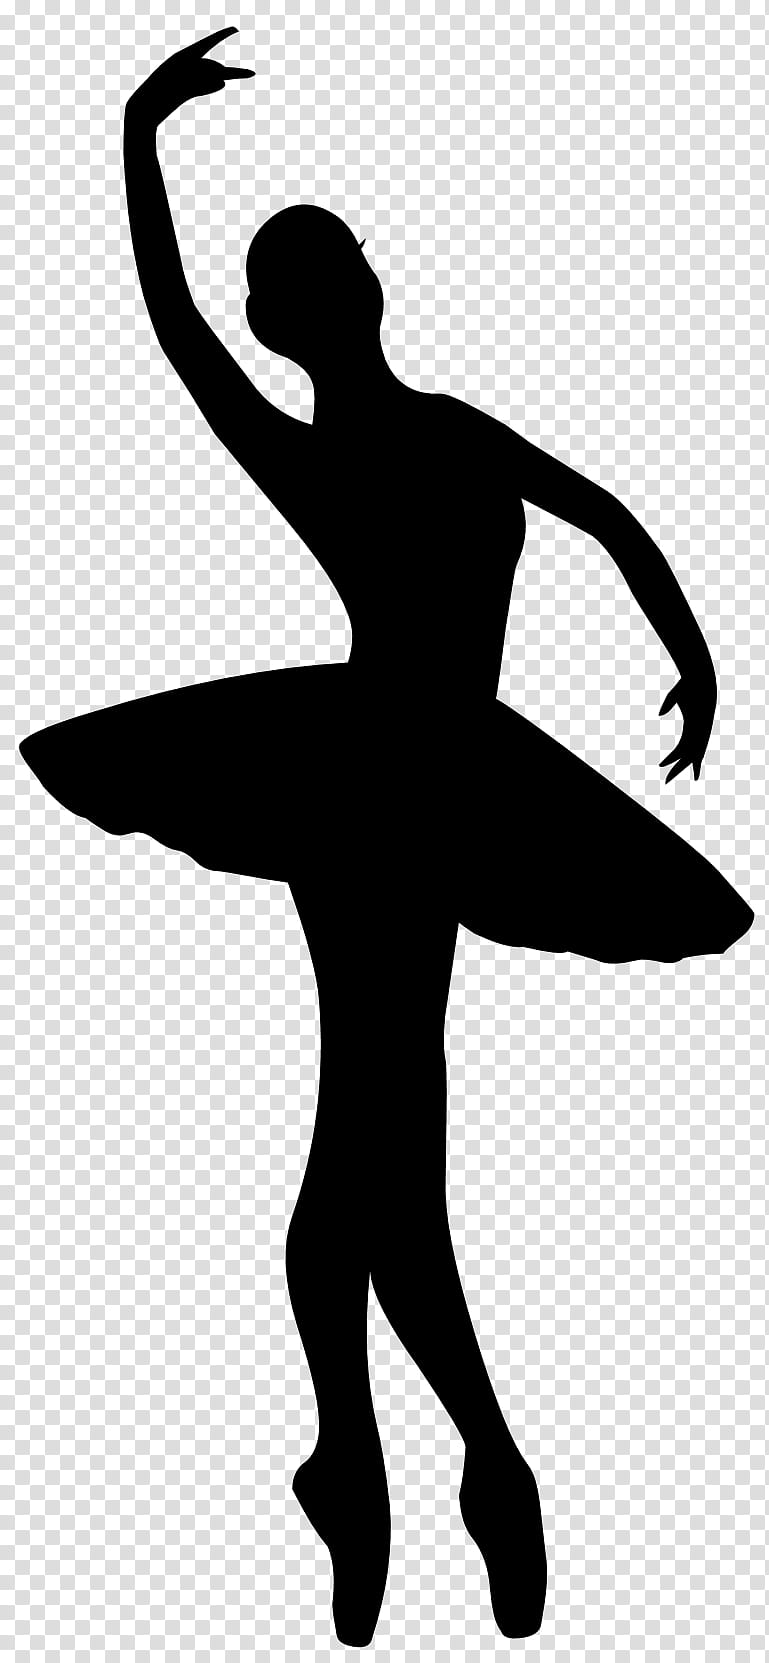 Party Silhouette, Ballet, Dance, Ballet Dancer, Free Dance, Drawing, Dance Party, Ballet Shoe transparent background PNG clipart